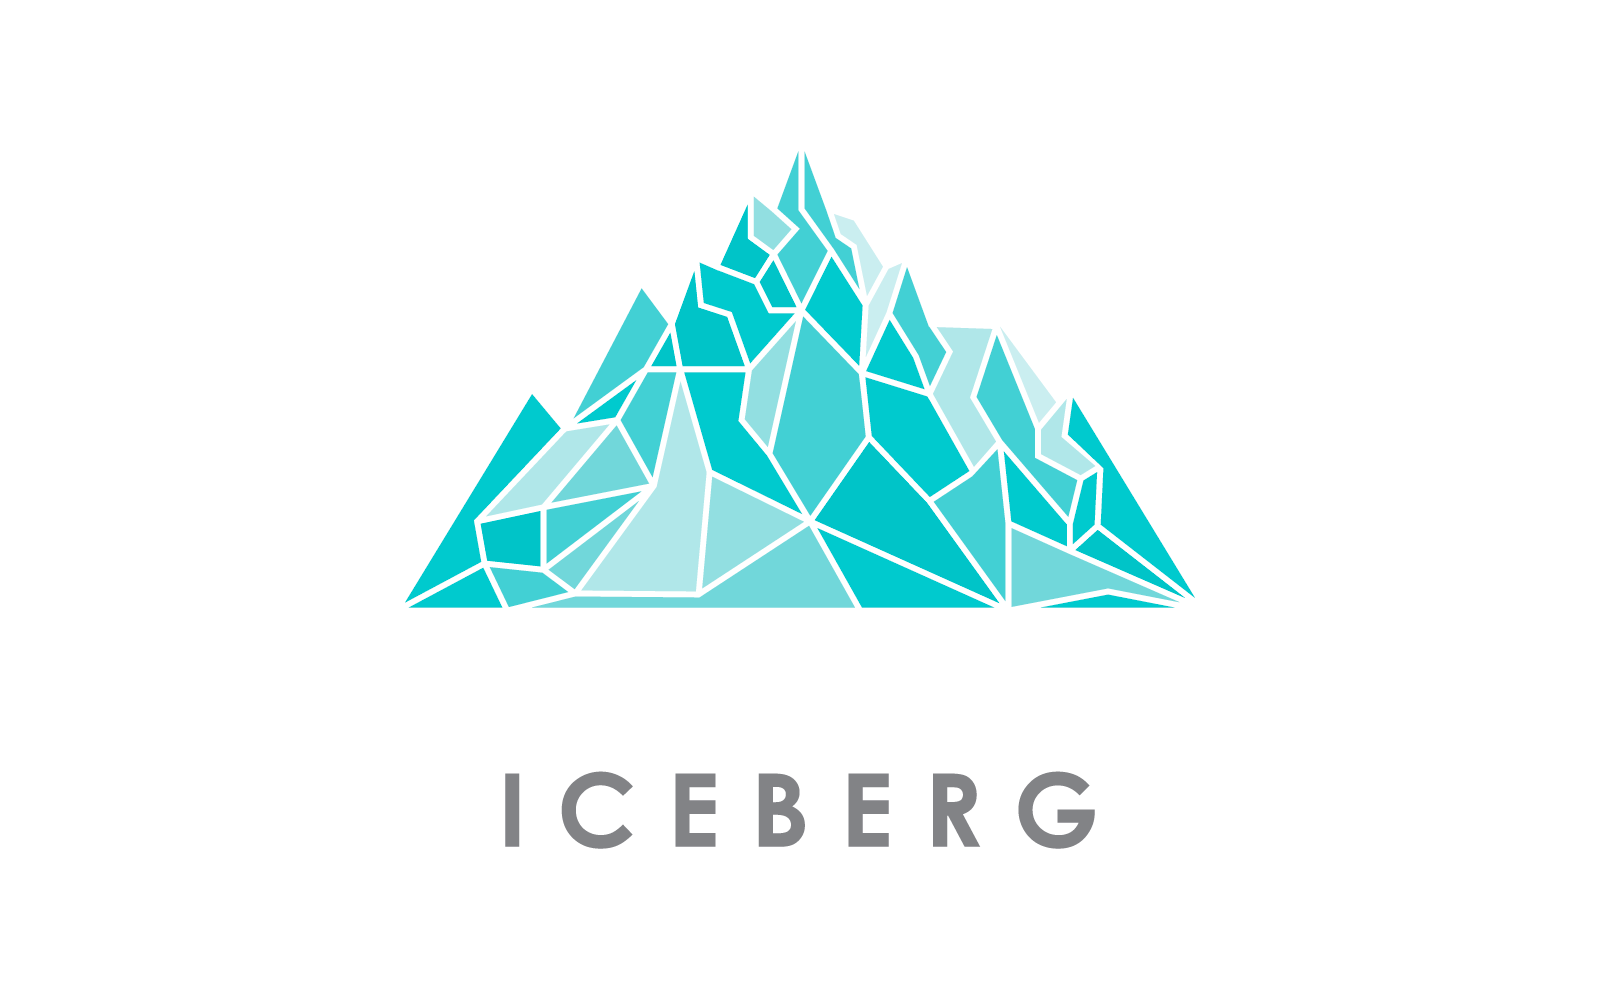 Iceberg ilustrace logo vektorové plochý design šablona